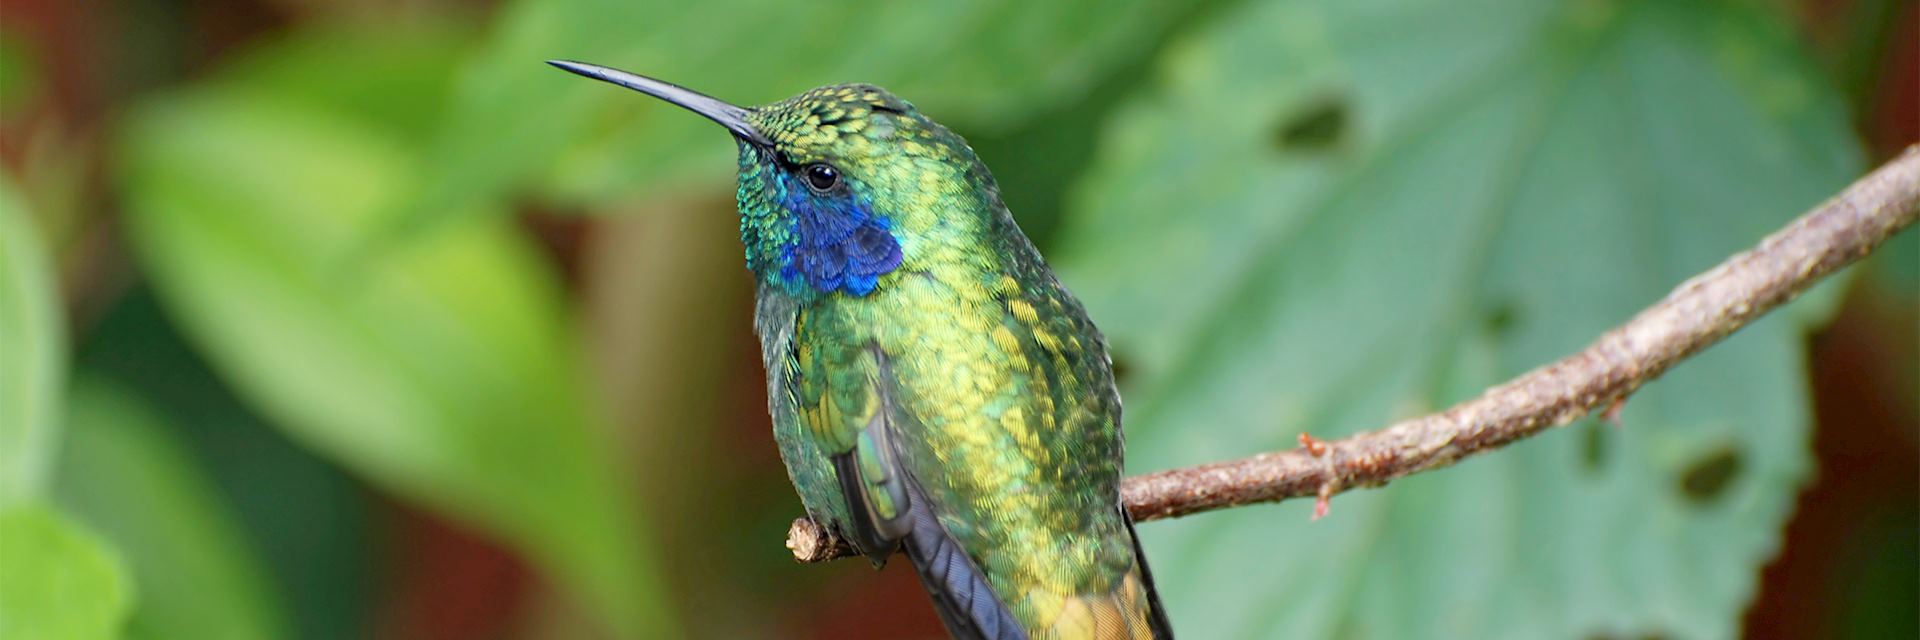 Hummingbird, Monteverde Cloudforest Reserve, Costa Rica